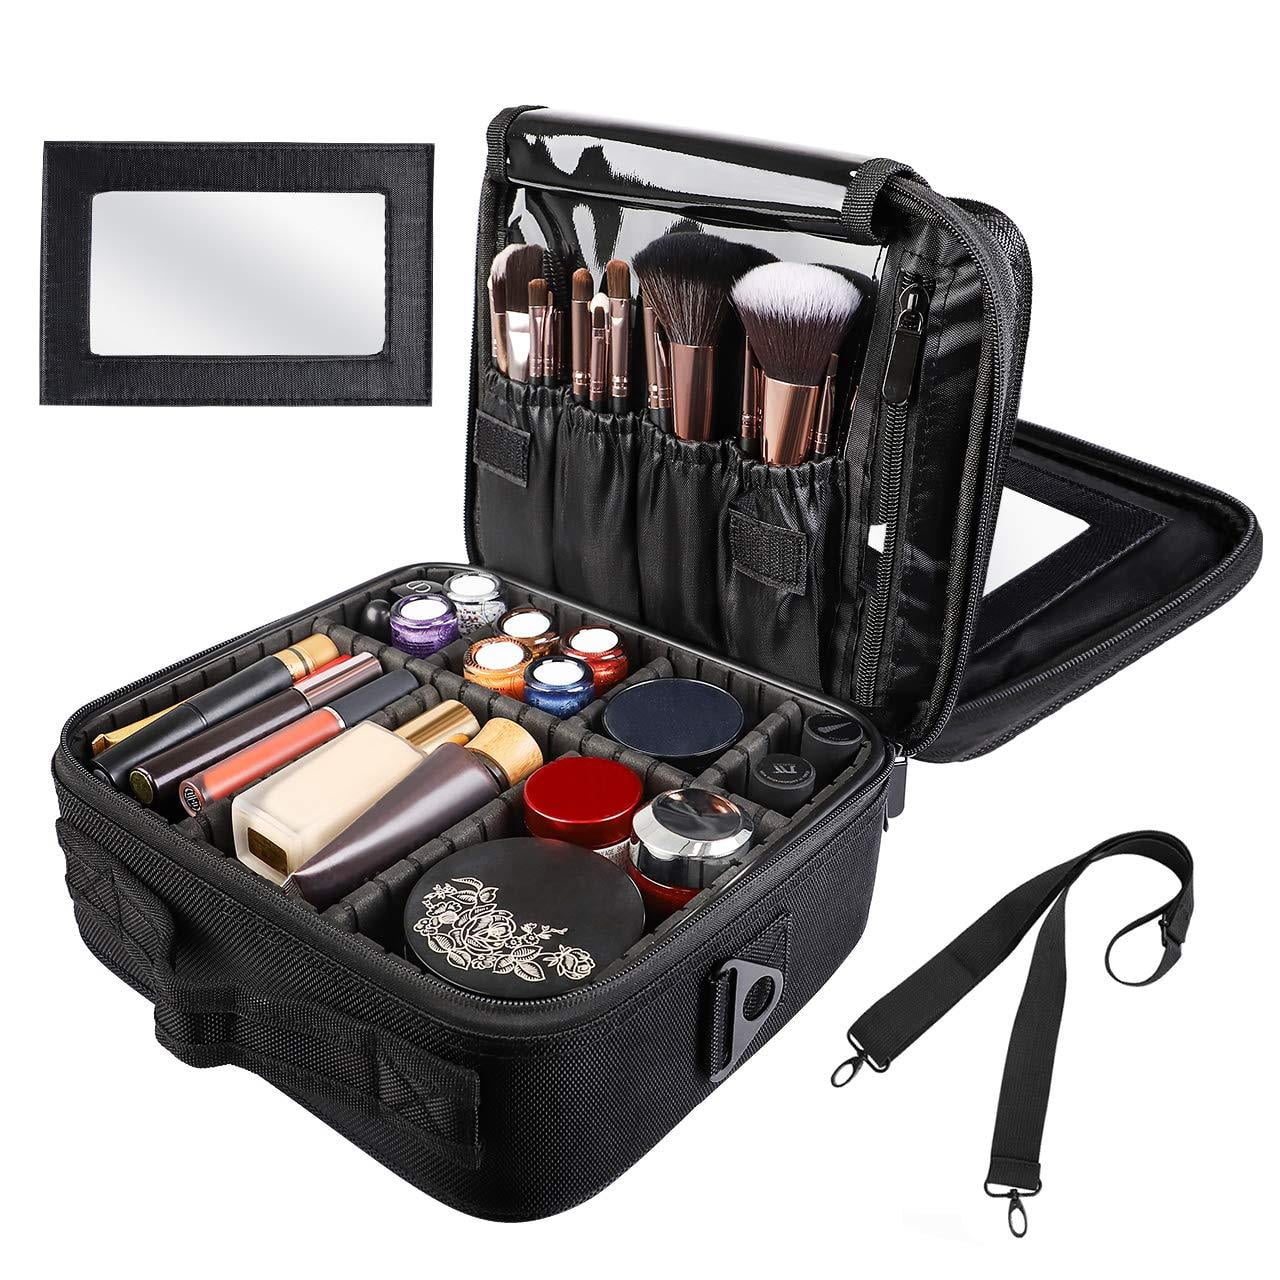 Kootek Travel Makeup Bag Double-Layer Portable Train Case Organizer ...